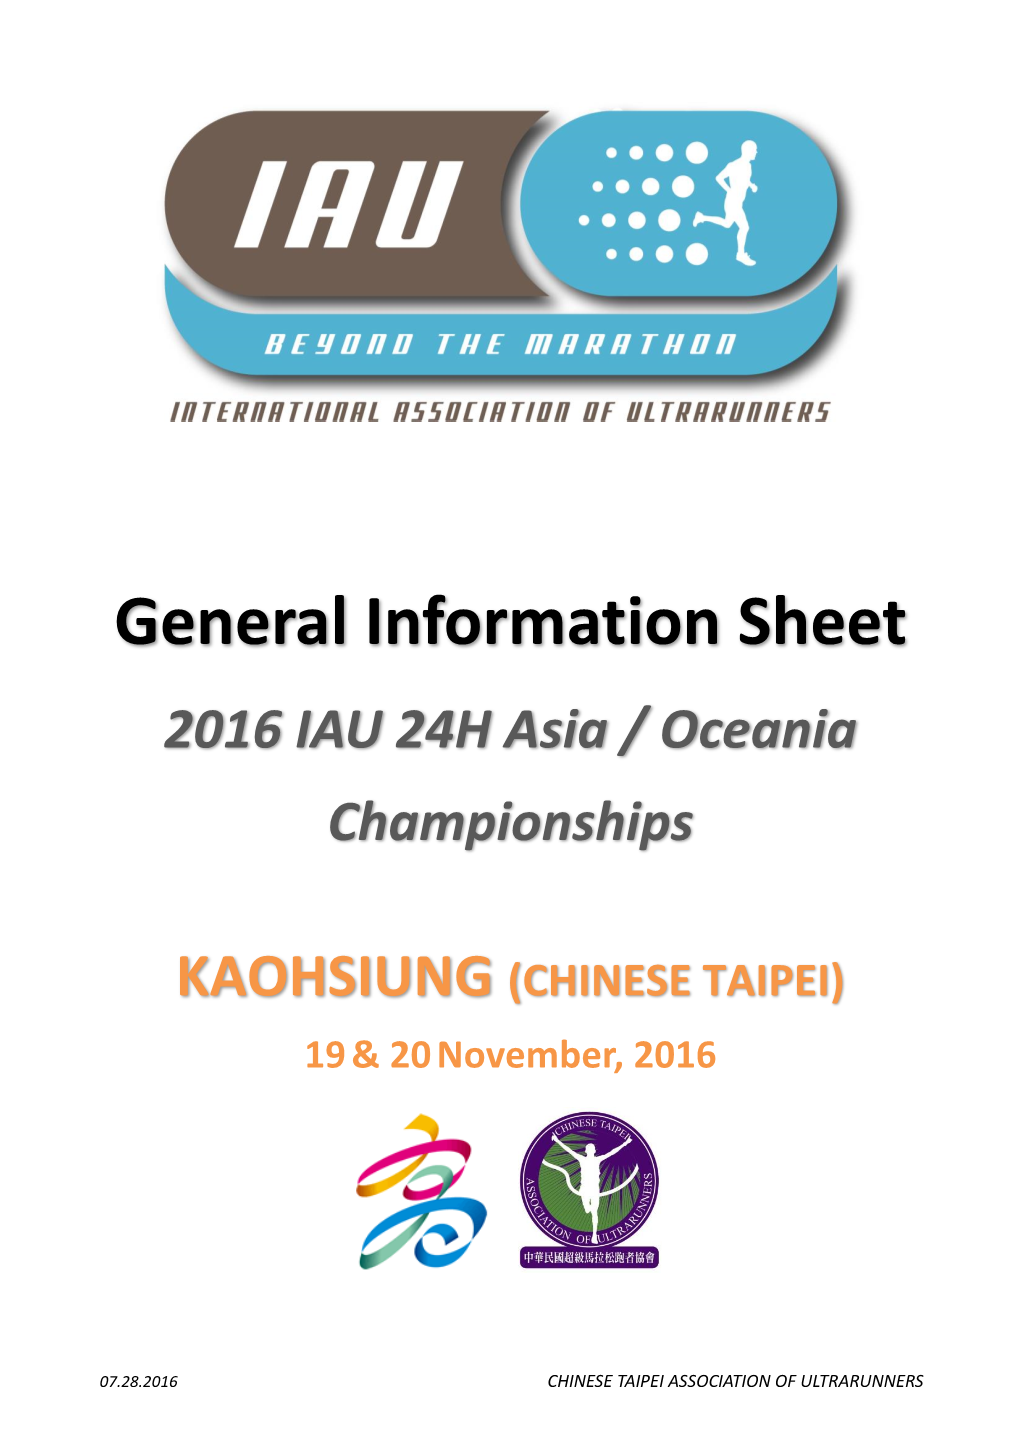 General Information Sheet 2016 IAU 24H Asia / Oceania Championships